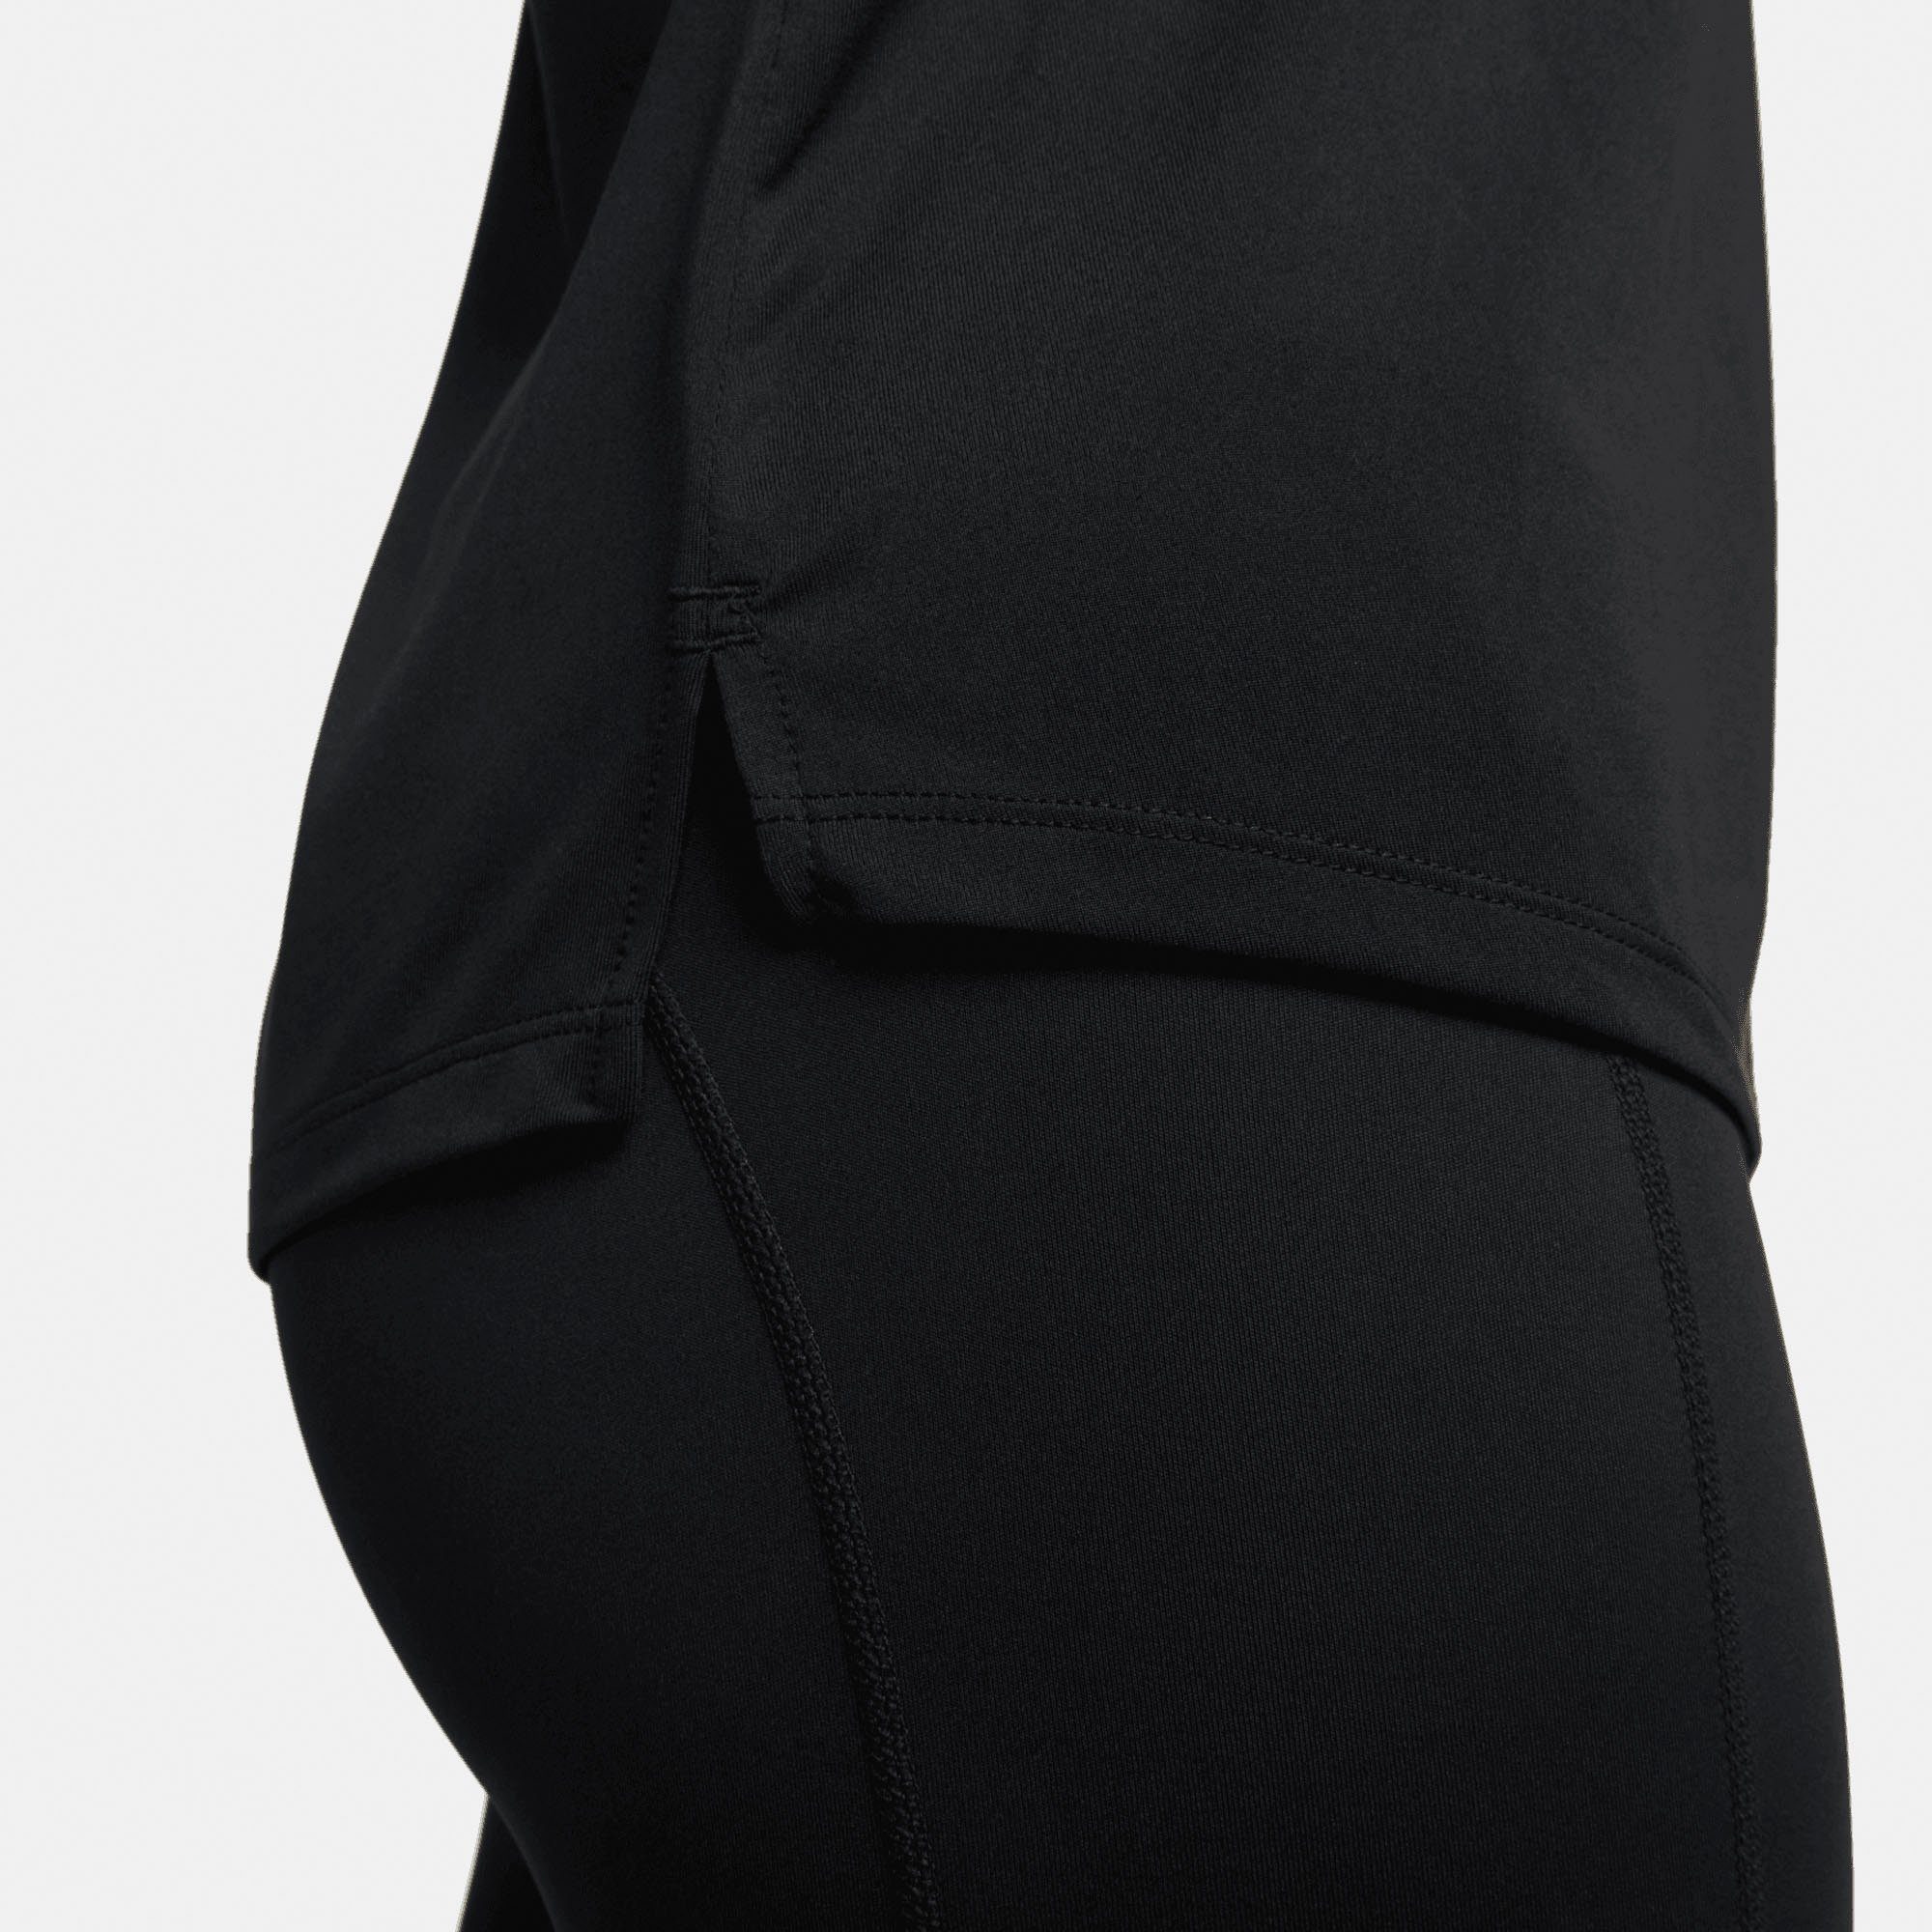 Laufshirt BLACK Top Swoosh Dri-FIT One Women's Short-Sleeved Nike